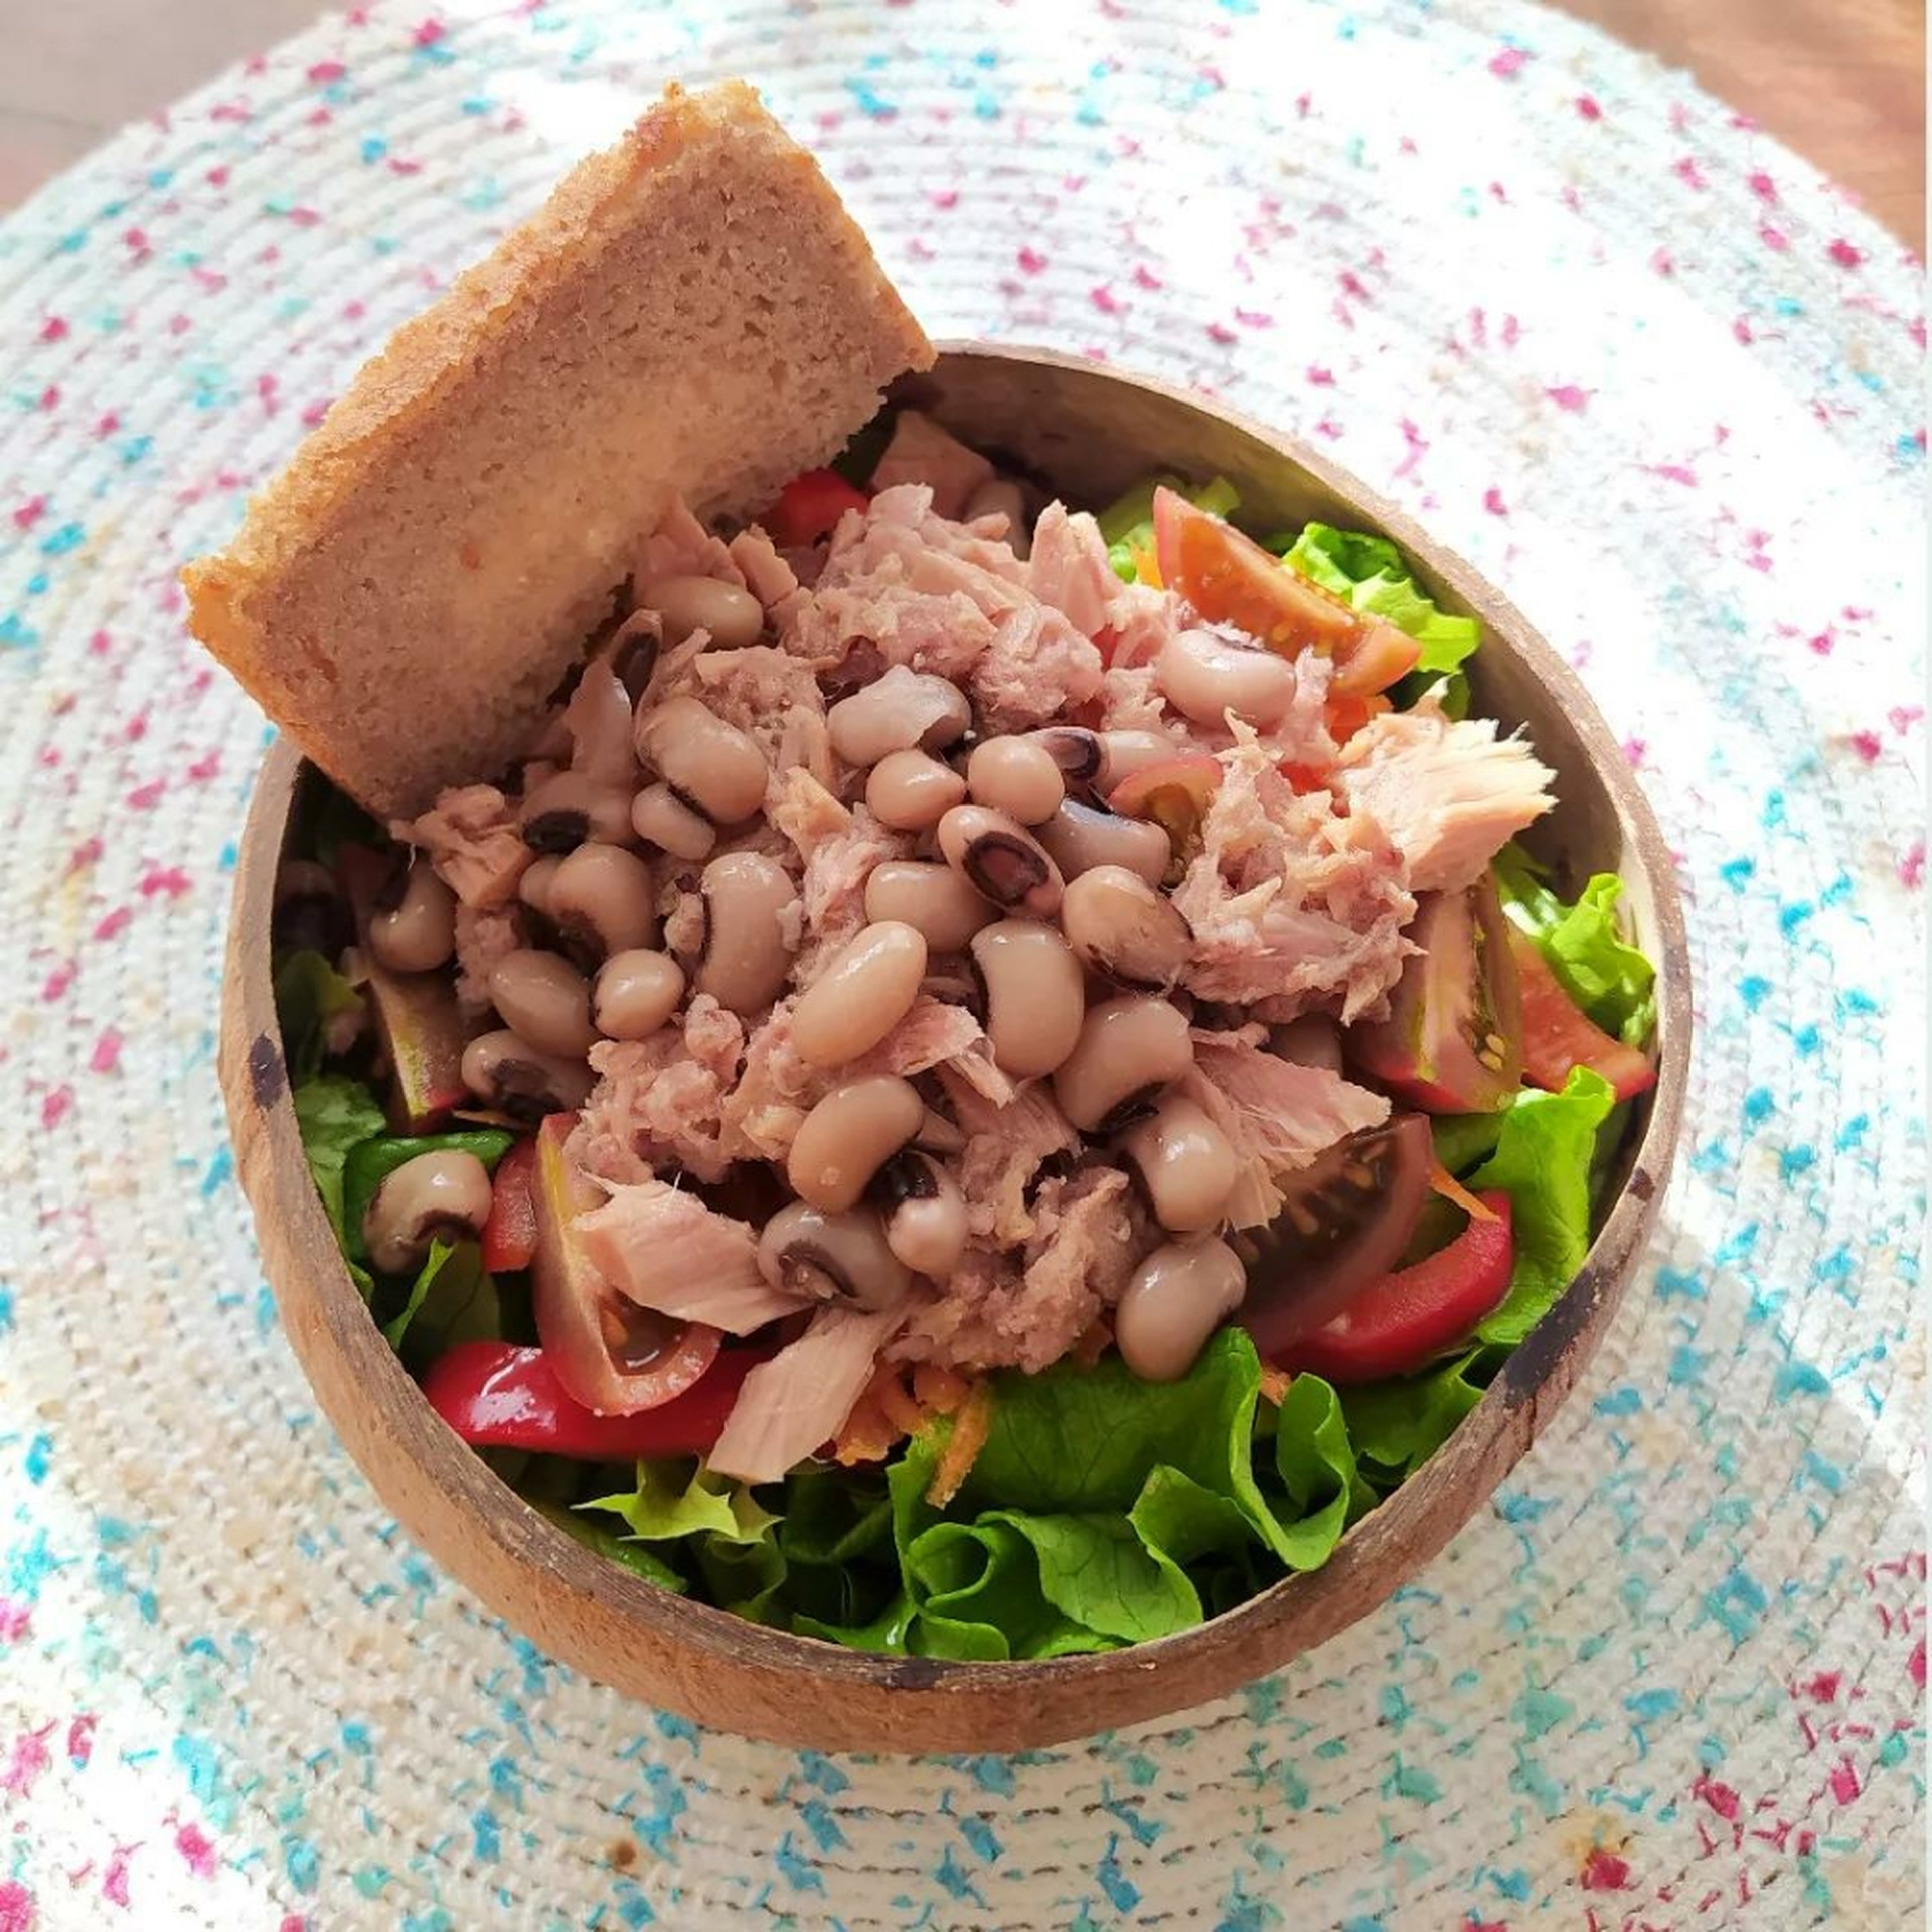 Salad with tuna and legumes